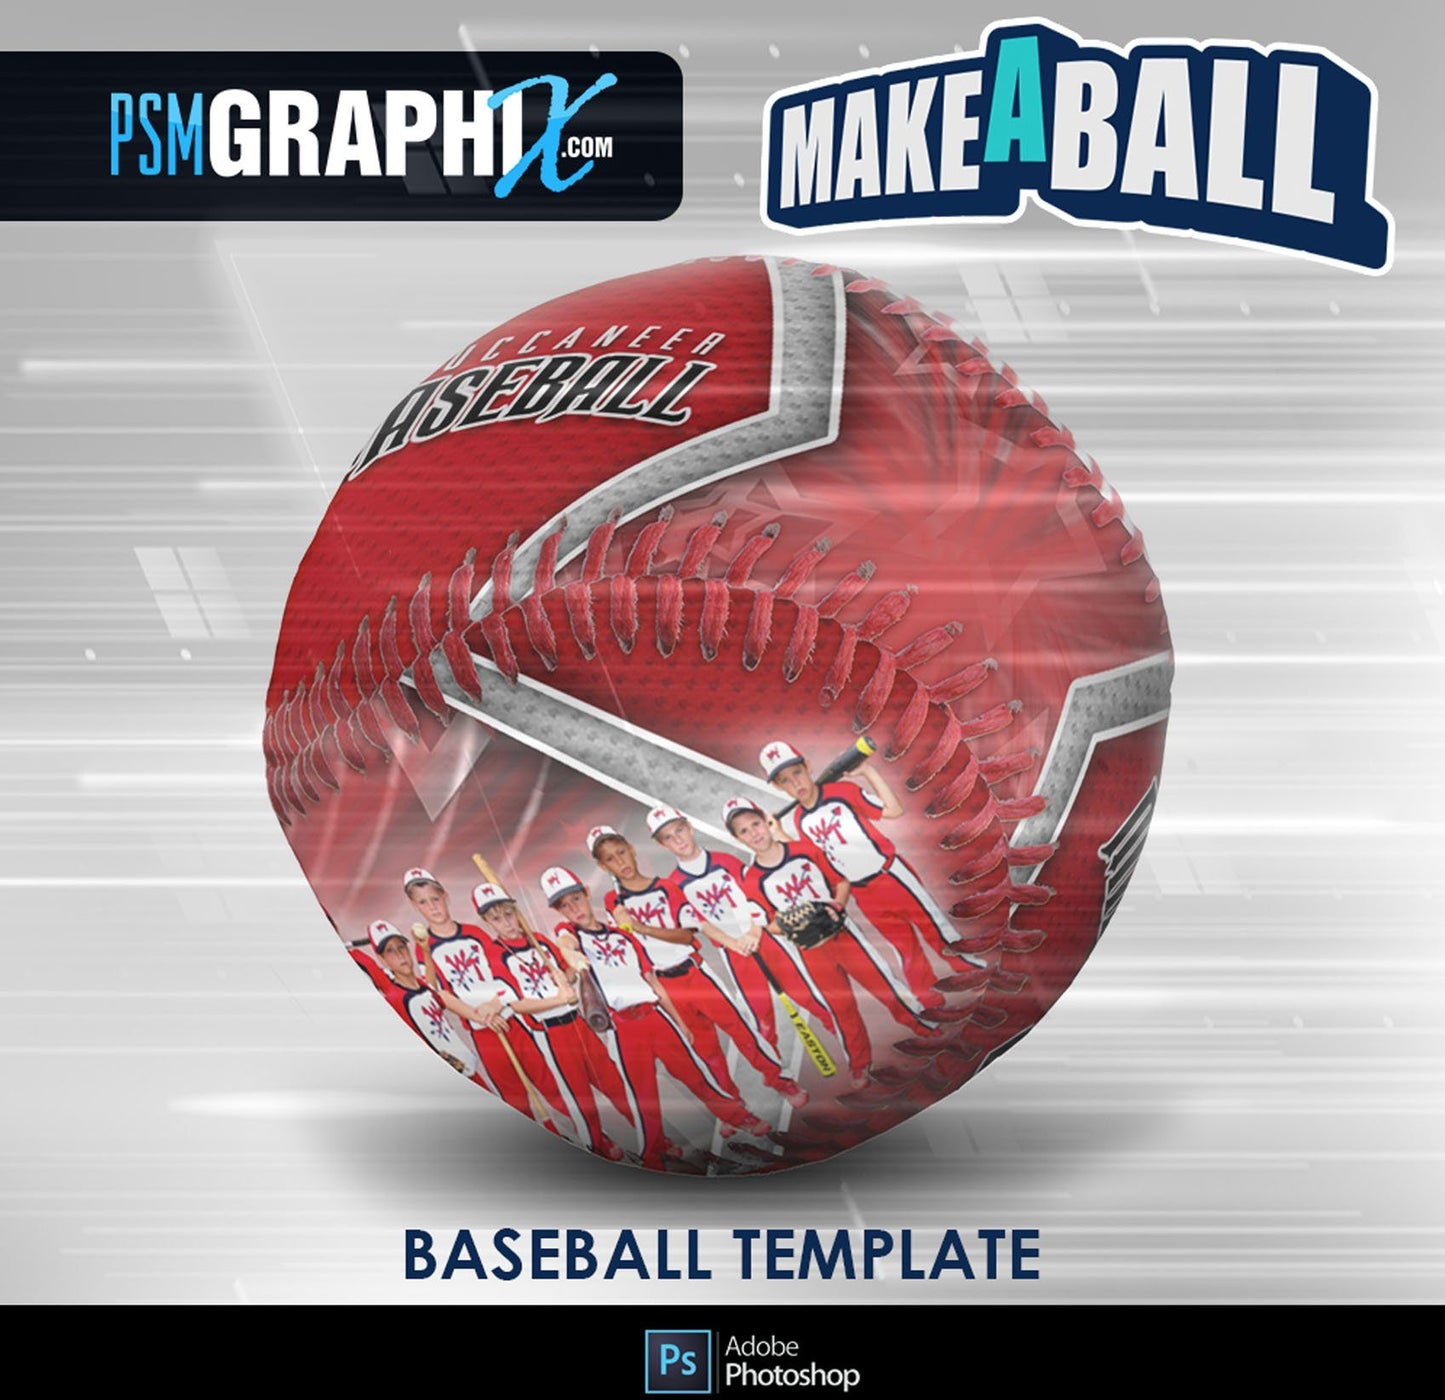 Spirit - V.1 - Baseball - Make-A-Ball Photoshop Template-Photoshop Template - PSMGraphix